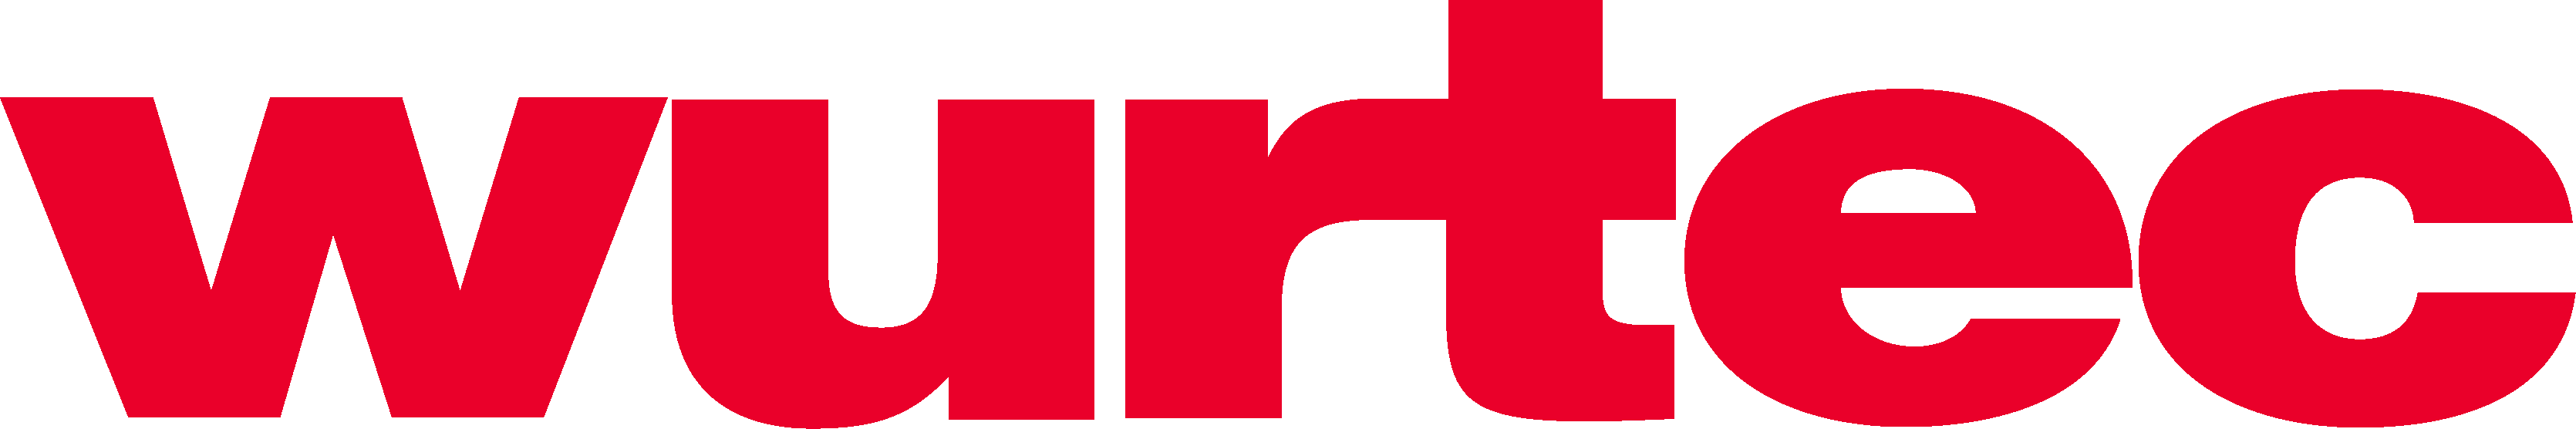 Wurtec logo